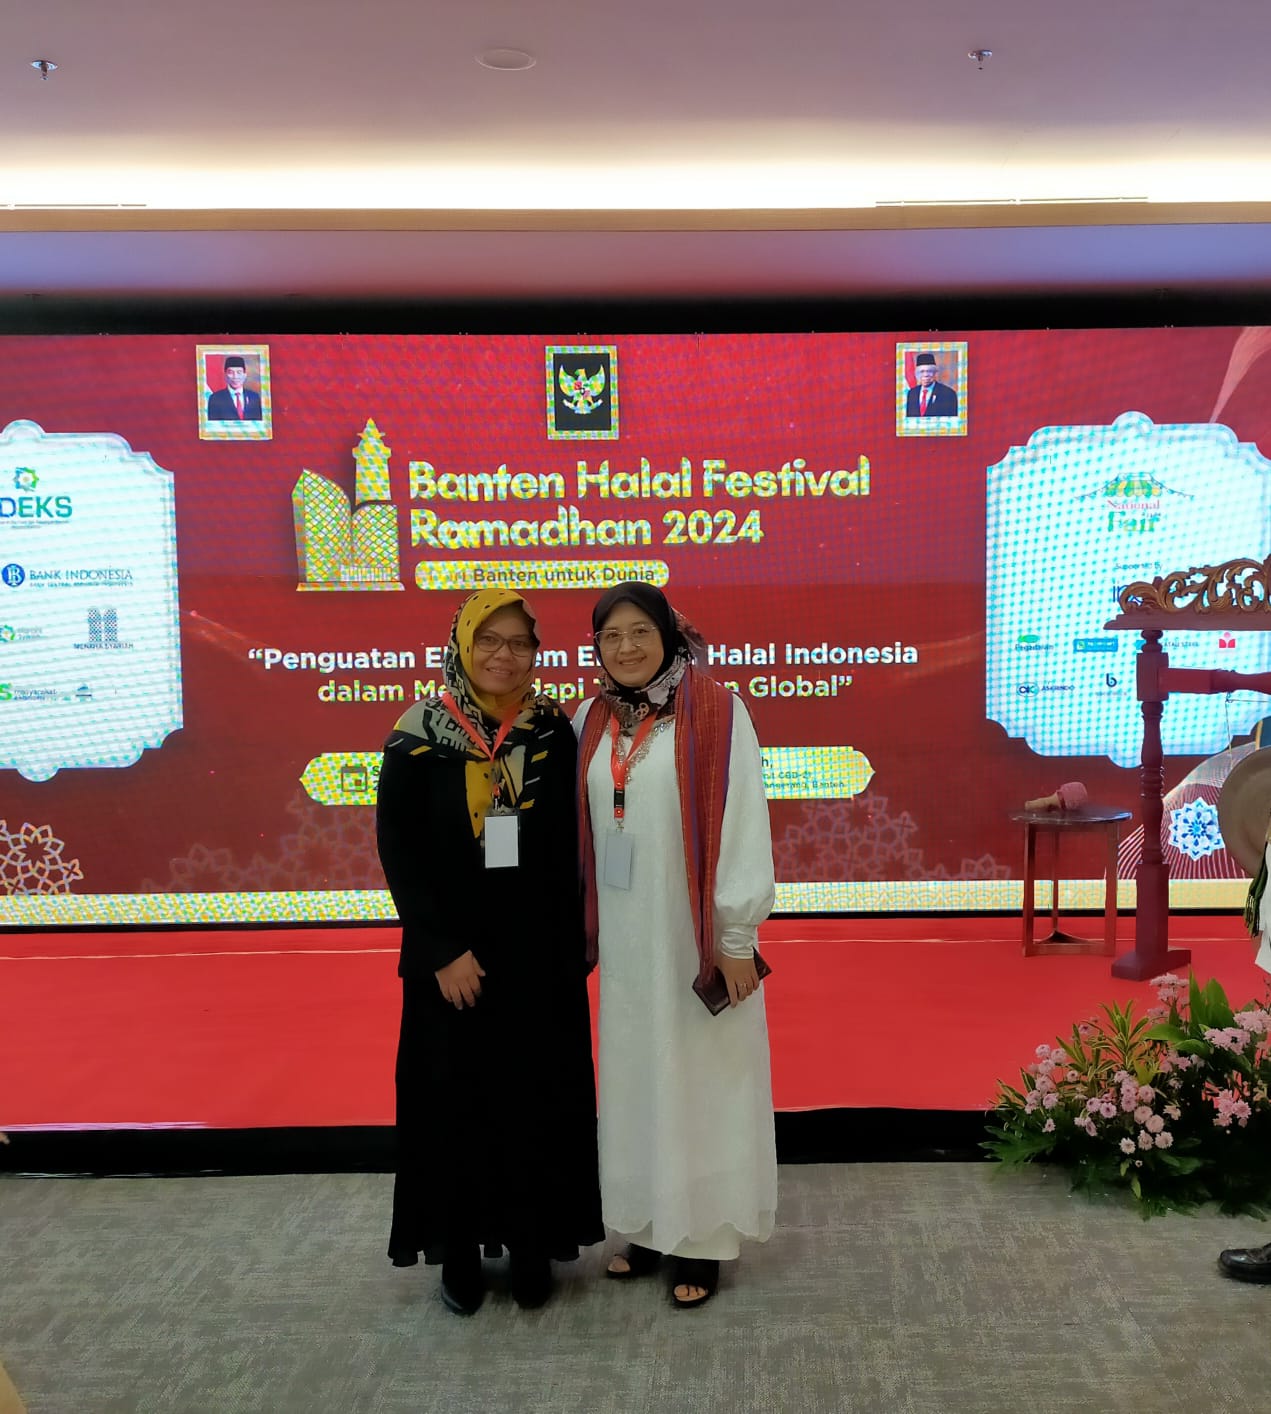 Pembukaan Halal Festival Ramadhan 2024 “Dari Banten Untuk Dunia” pada 02 April 2024